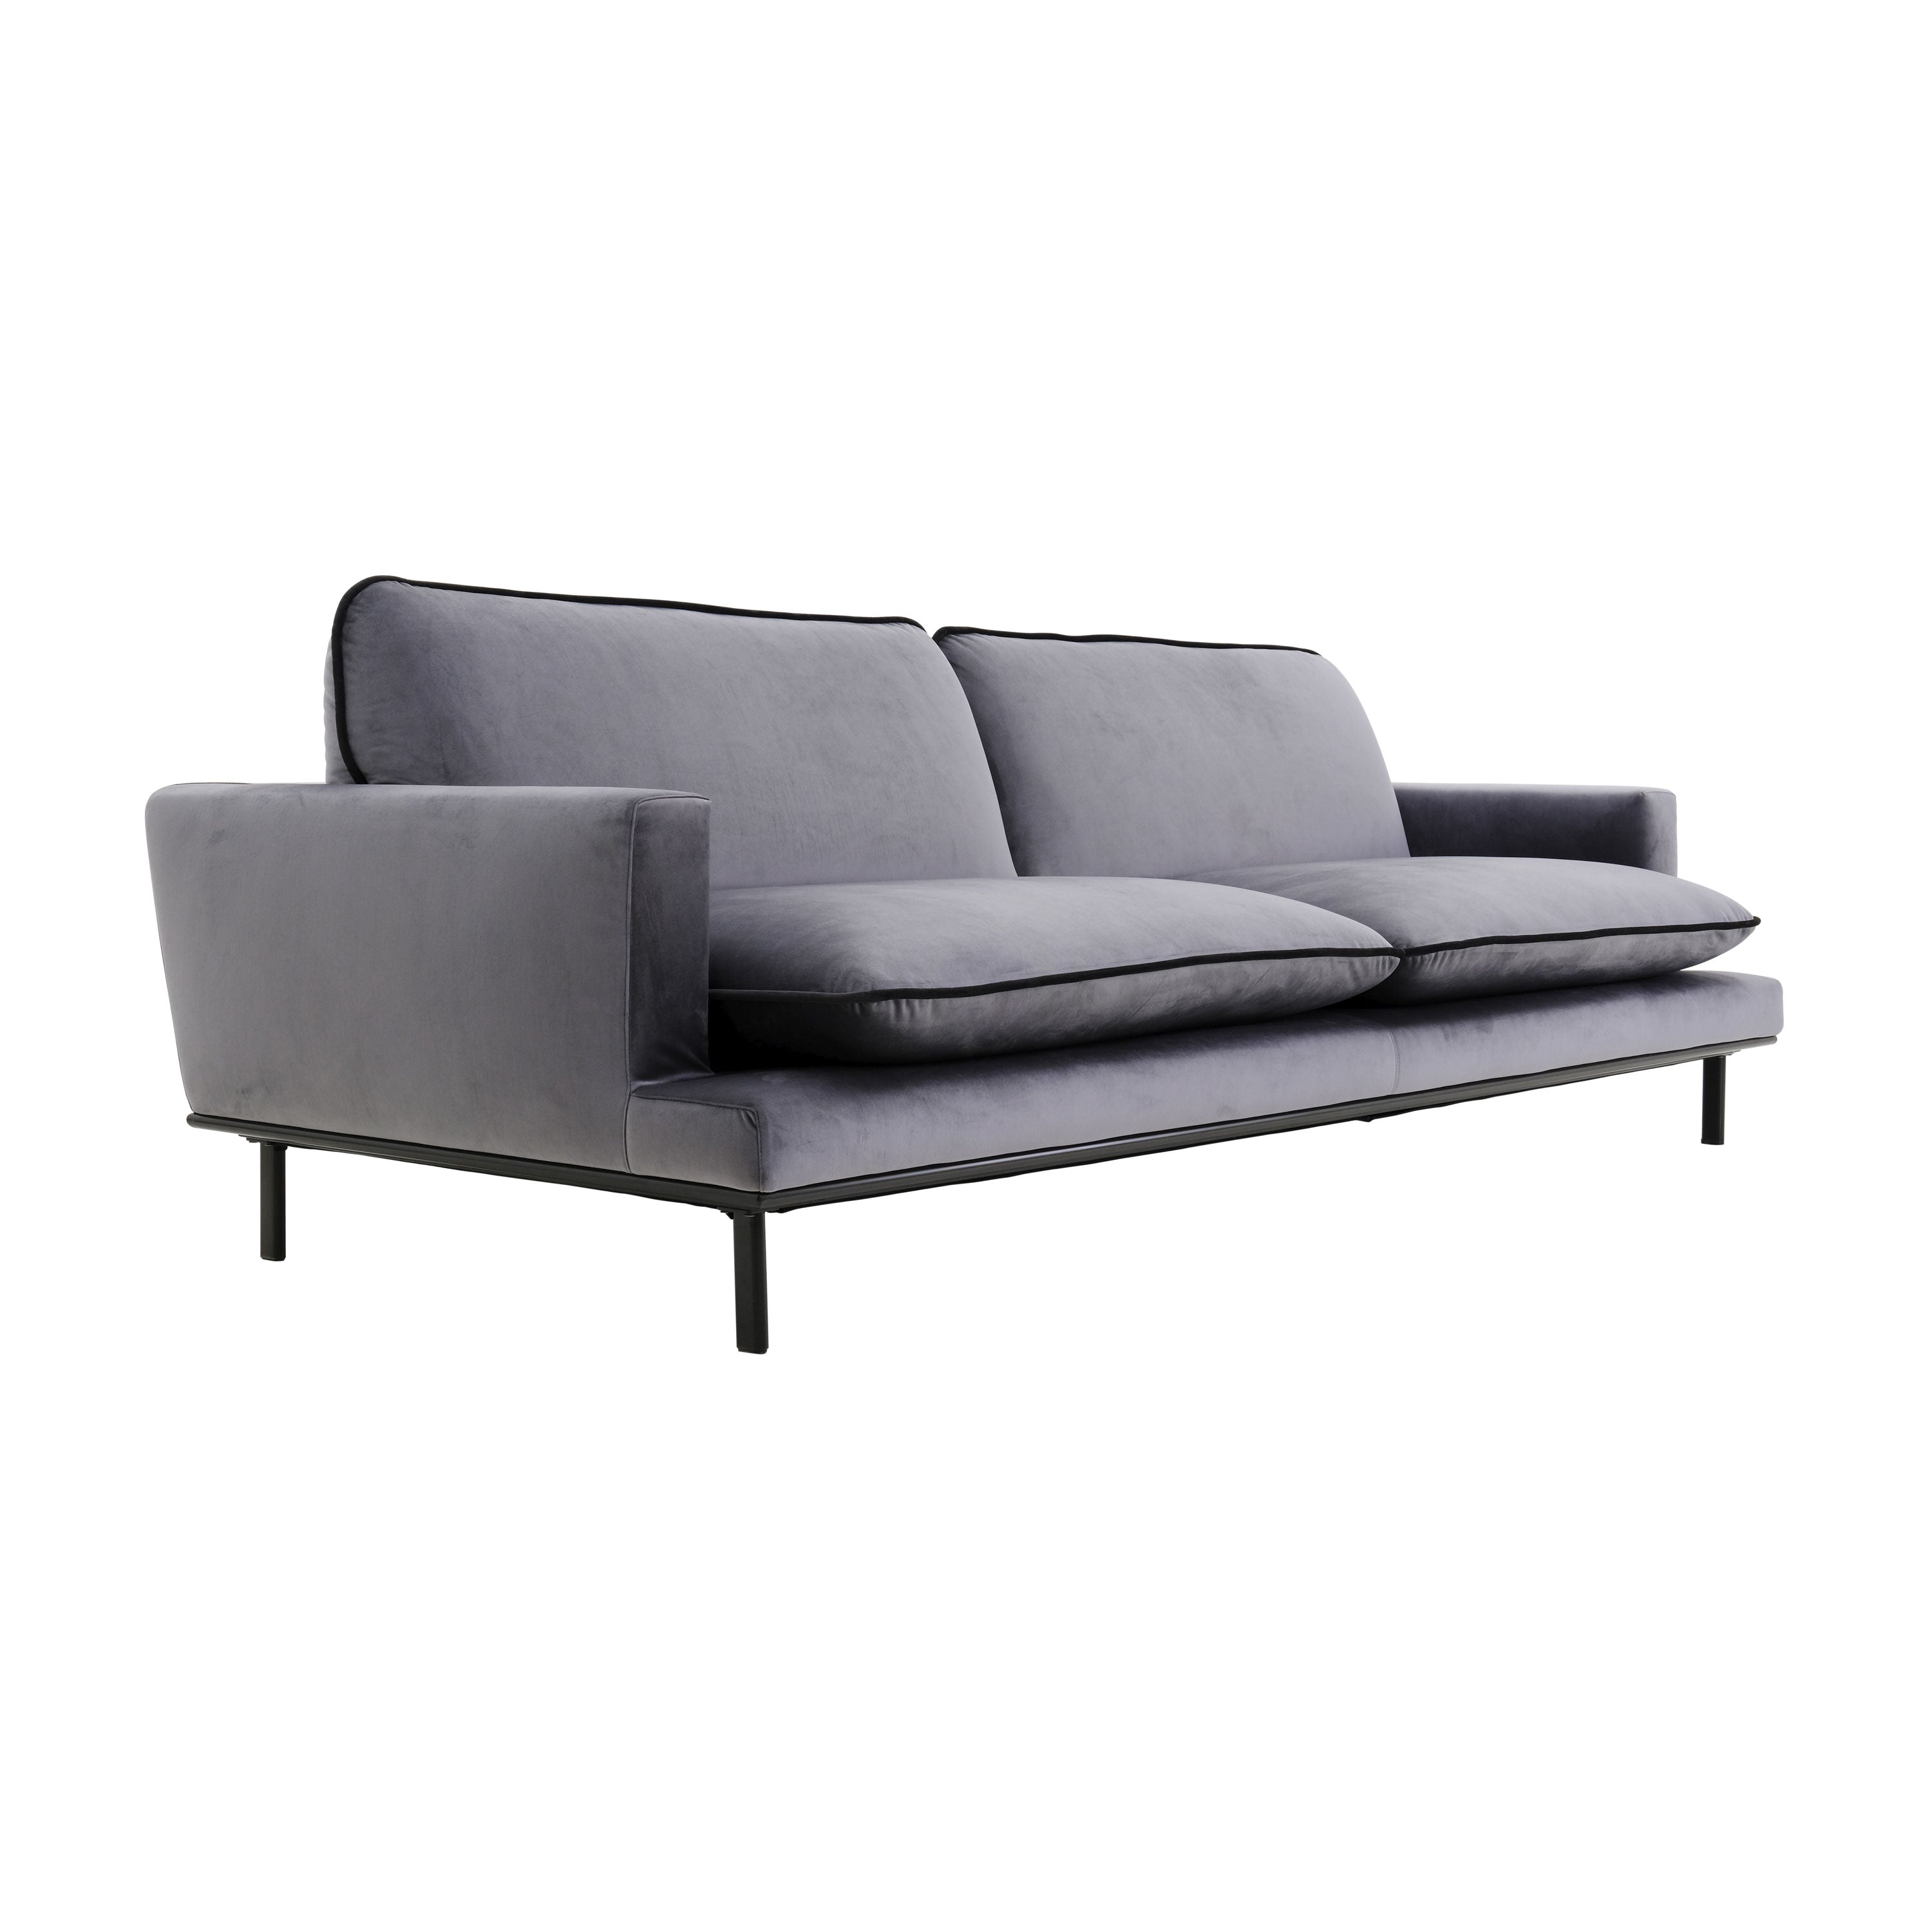 Nagara Bespoke Upholstered Modern Style Five Seater Sofa MS9033G Custom Made To Order